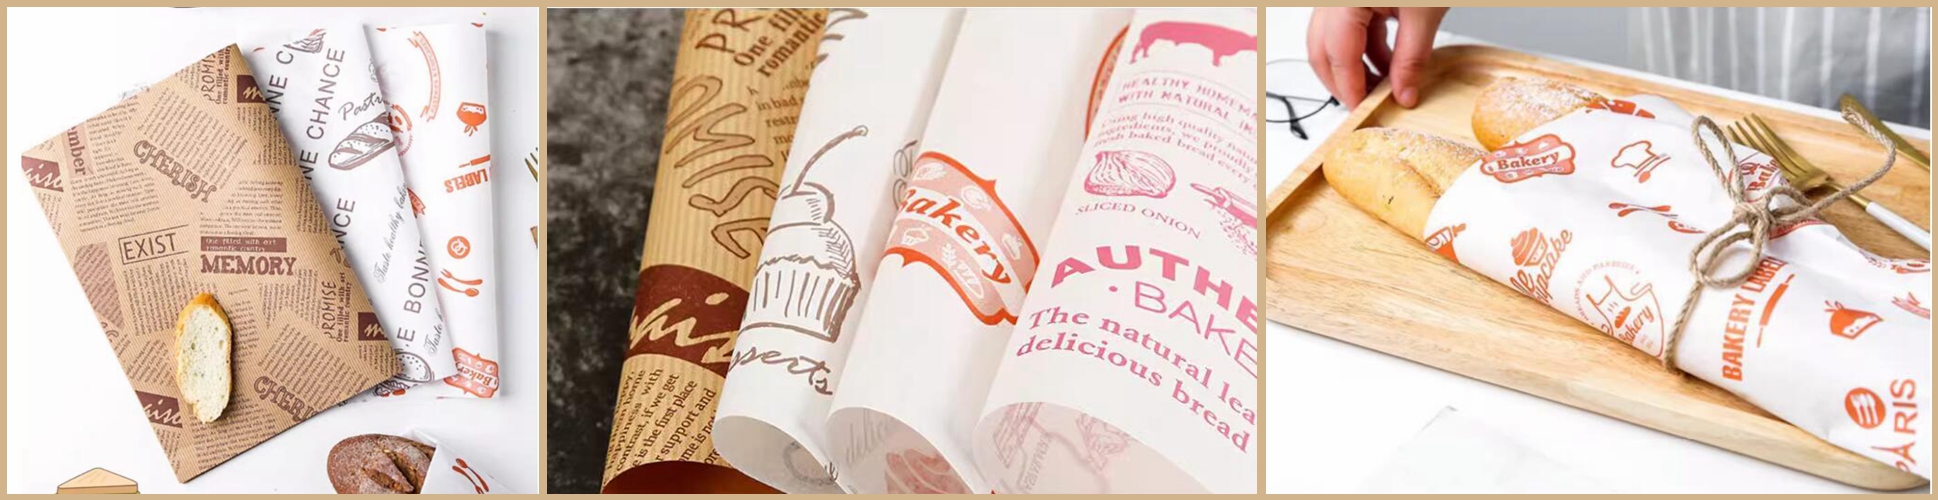  Liner Paper Food Oil Greaseproof Paper White Brown Sandwich Packaging